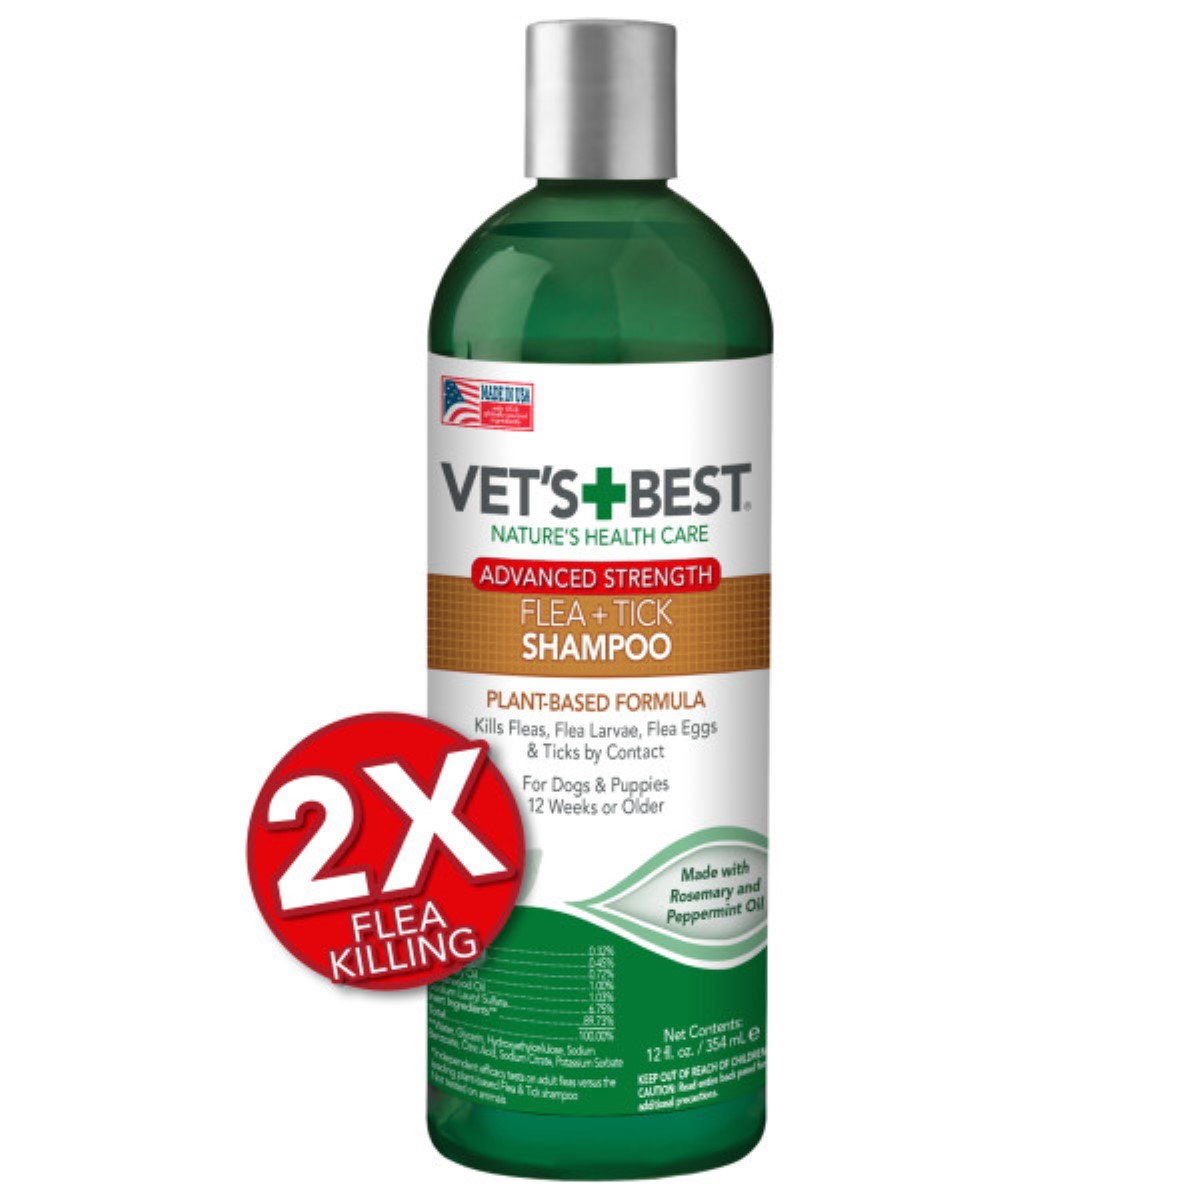 Vet's Best Flea and Tick Advanced Strength Shampoo, 12 oz.